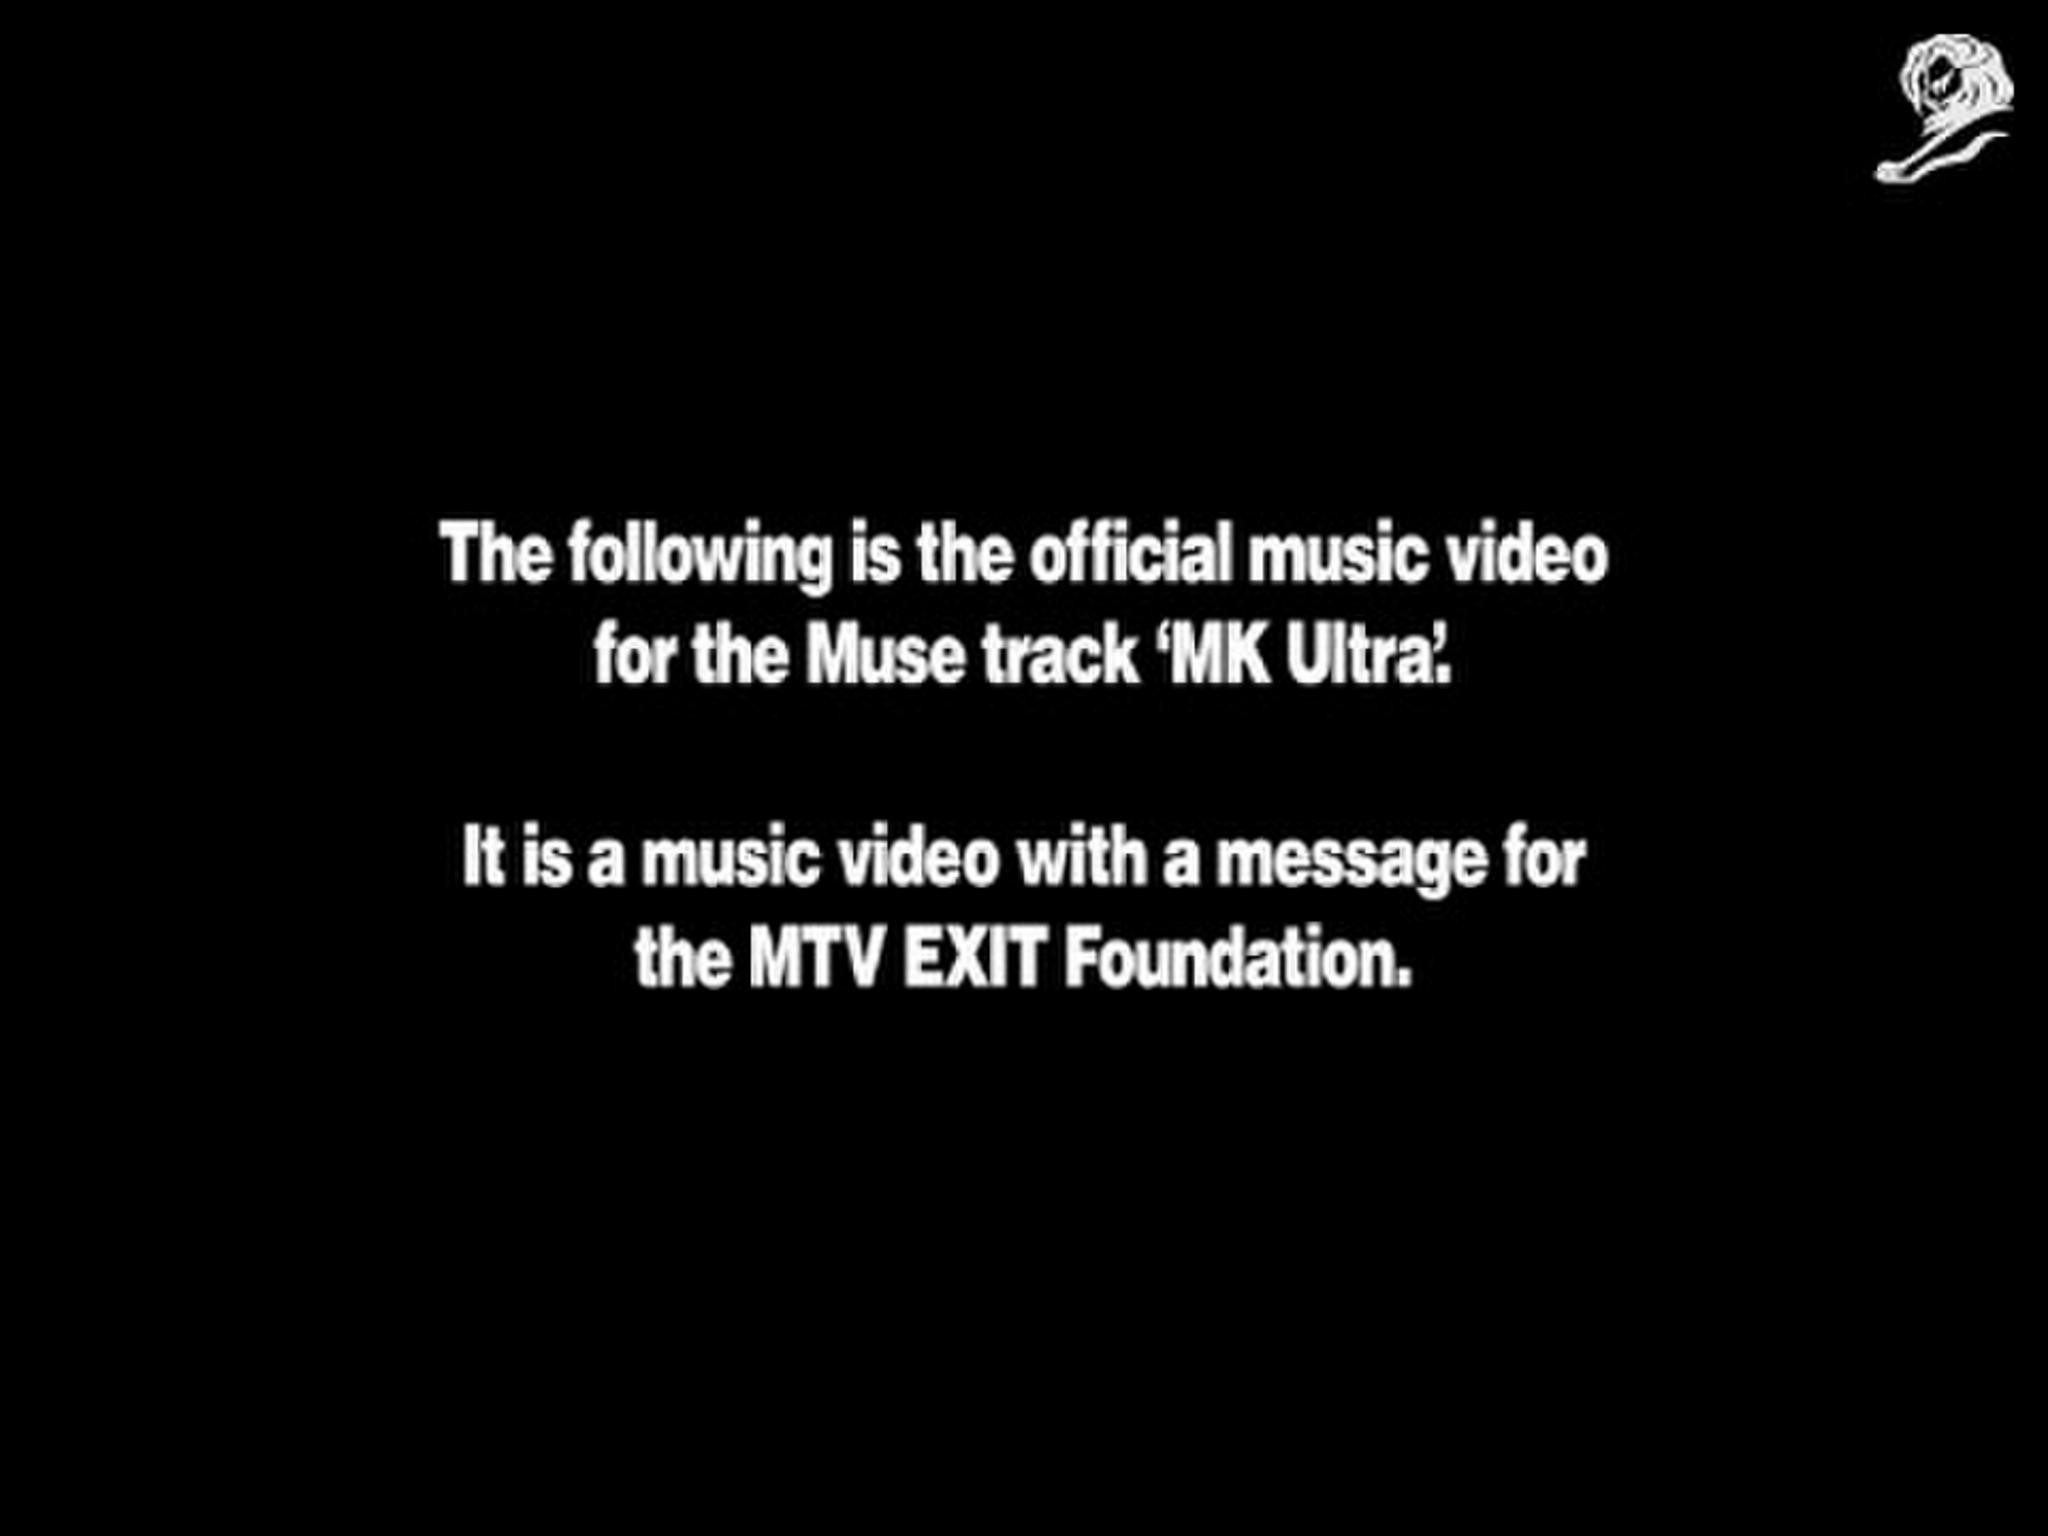 MTV EXIT